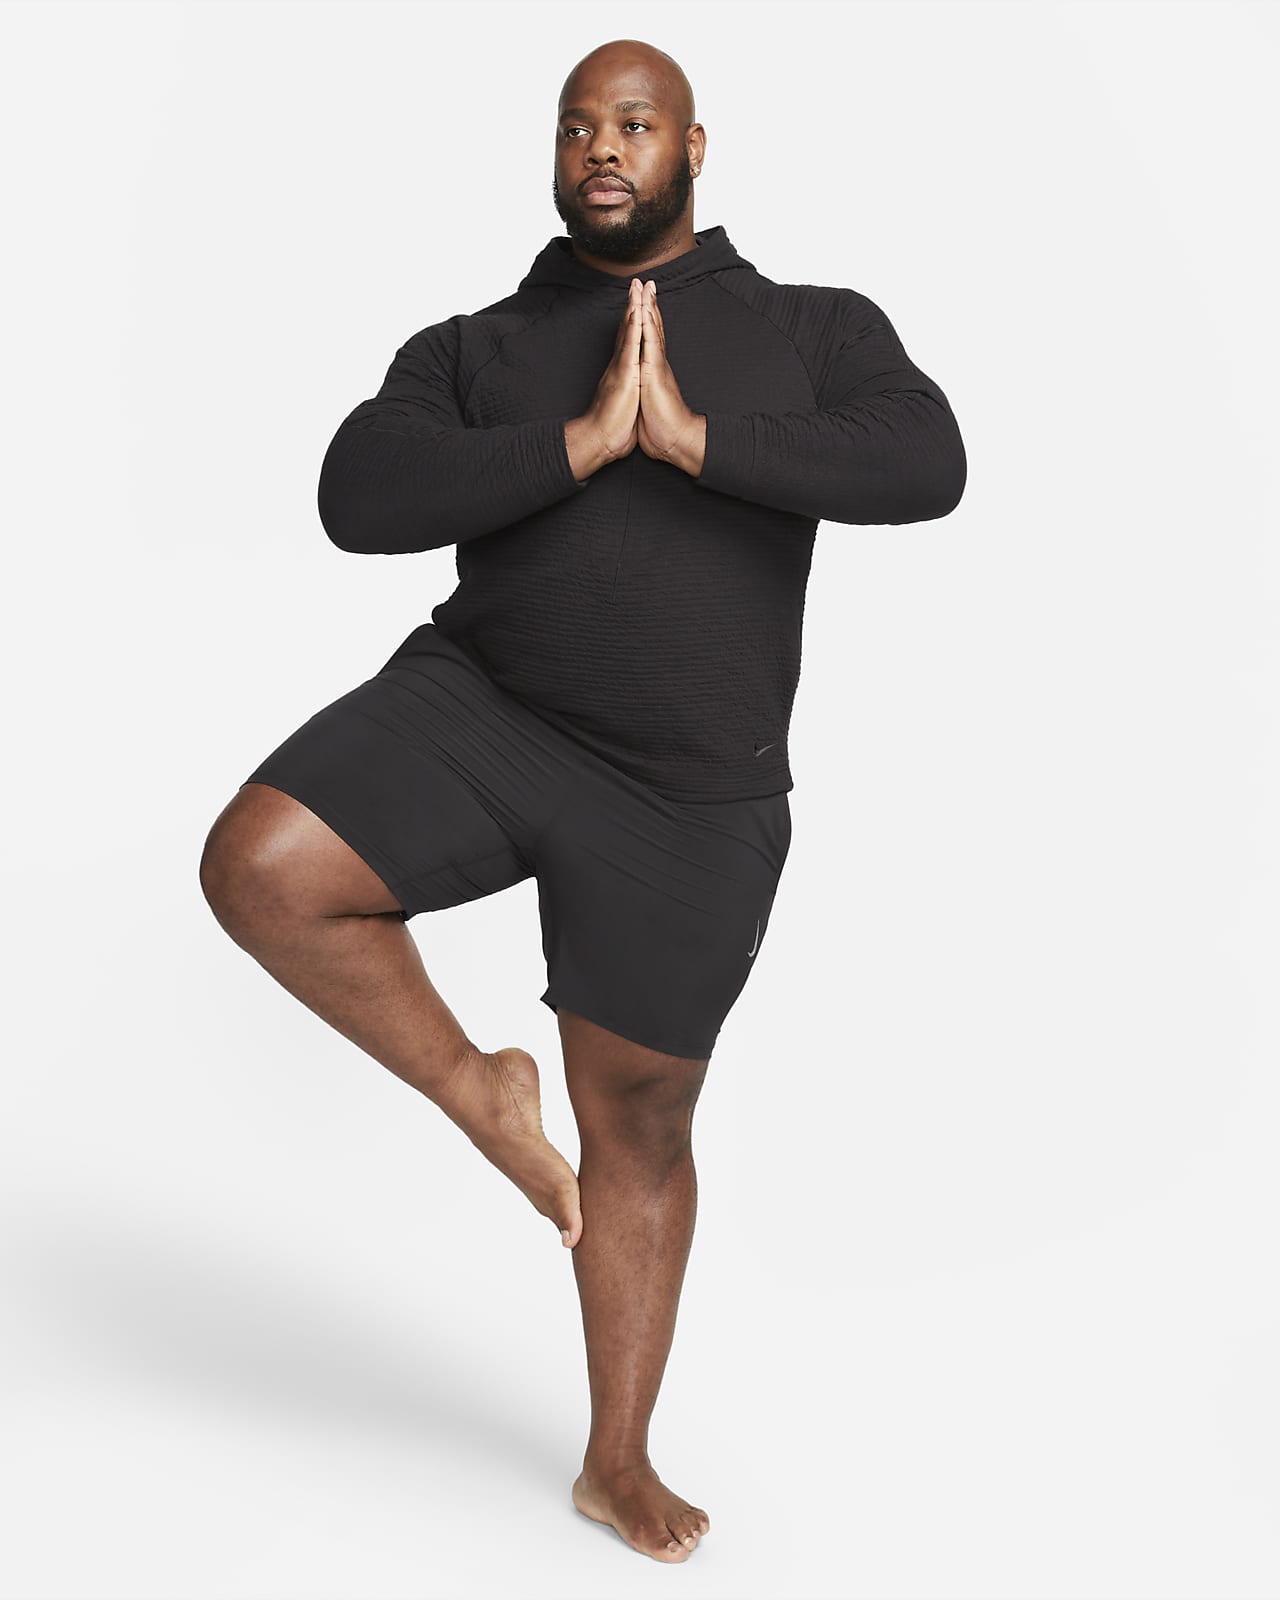 Nike Yoga Dri-FIT Crew Top 'Black/Black' - FB7775-010